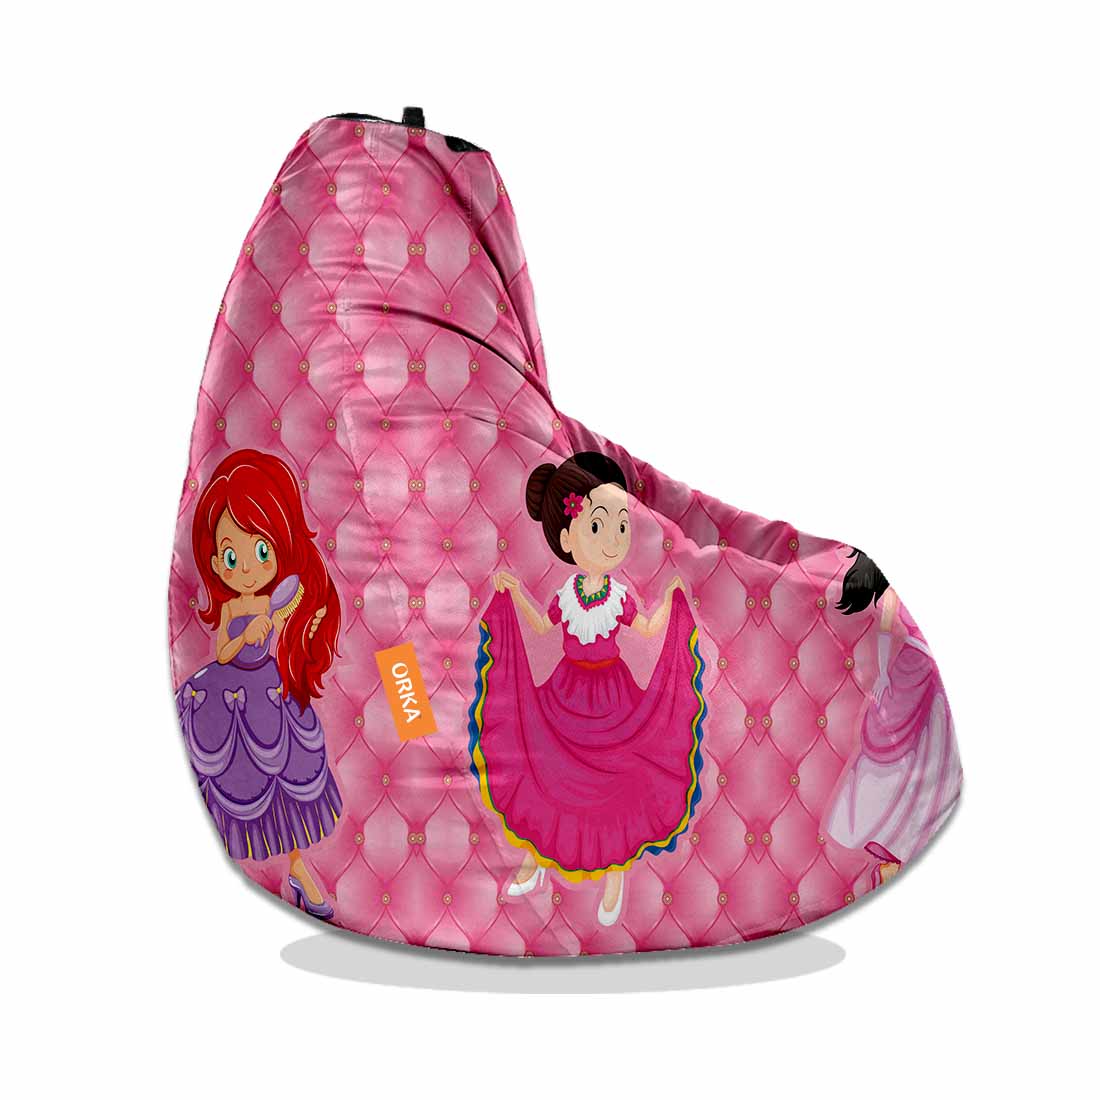 ORKA®Digital Printed Princess Theme Bean Bag 5  